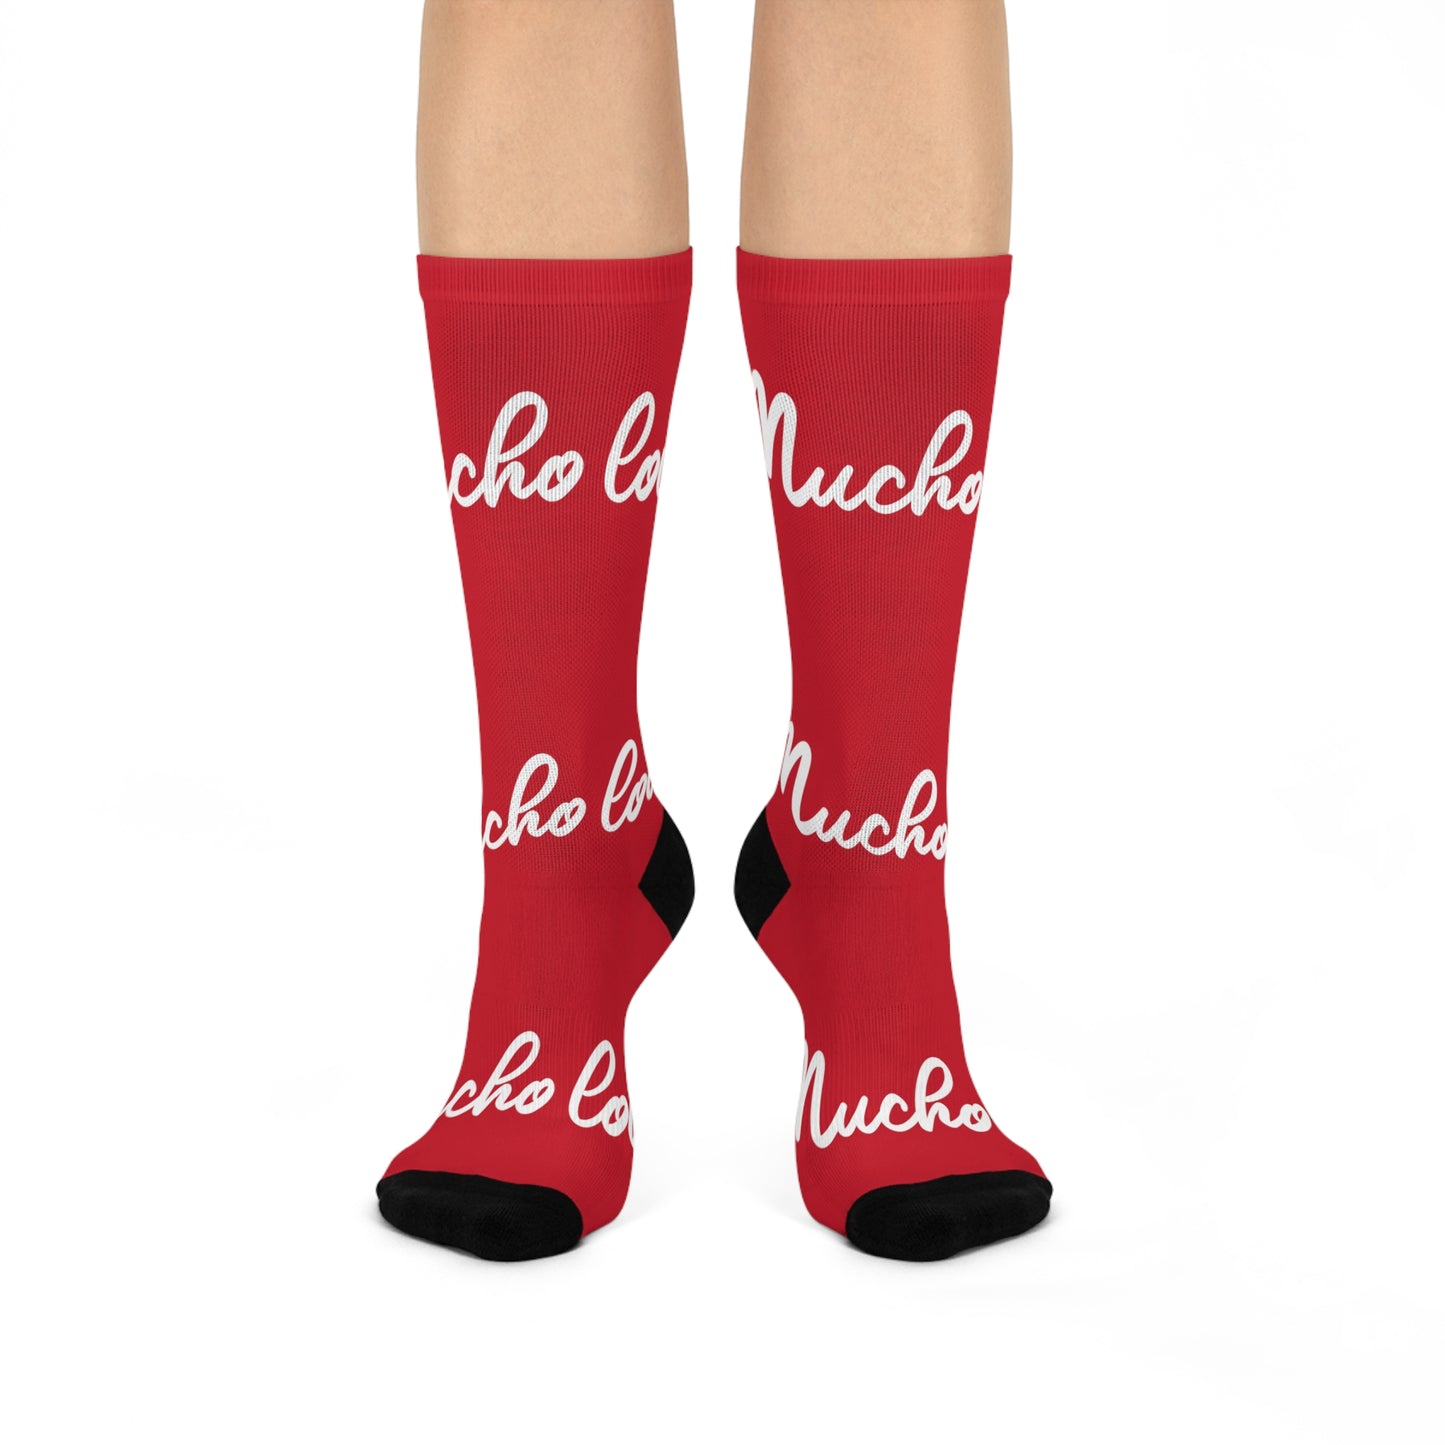 Mucho love -  Cushioned Crew Socks